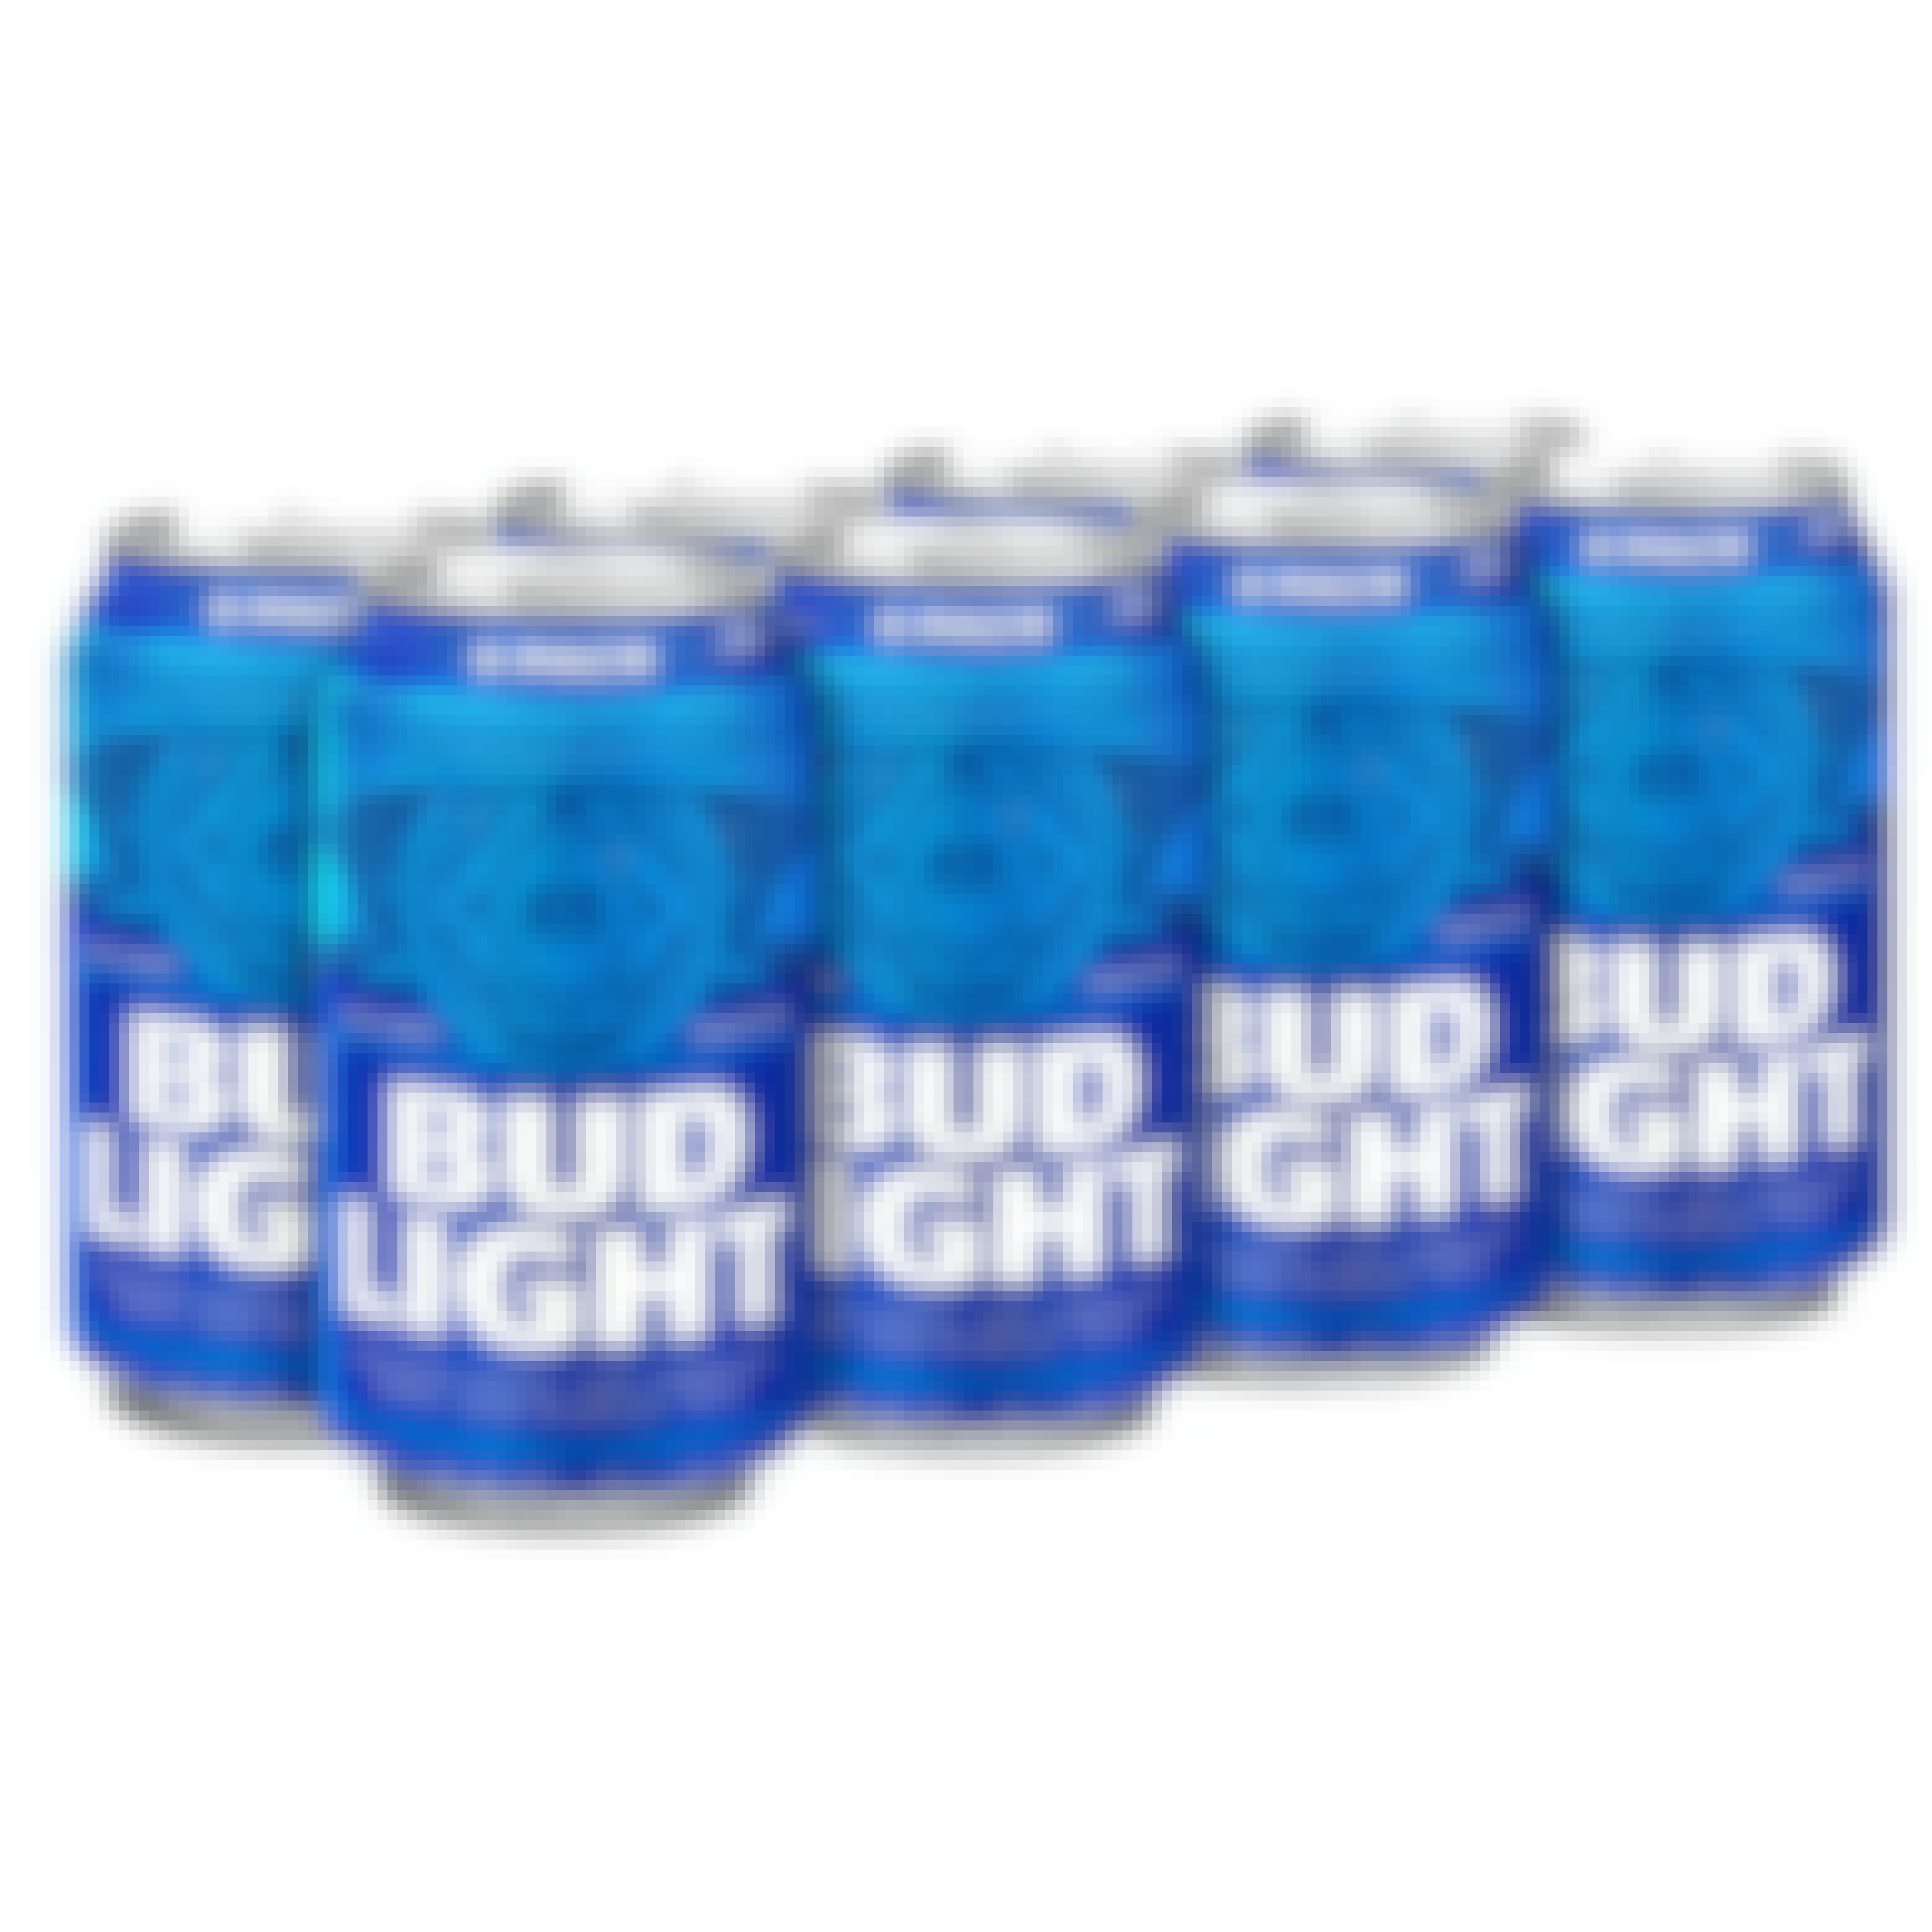 Bud Light Beer 8 pack 16 oz. Can